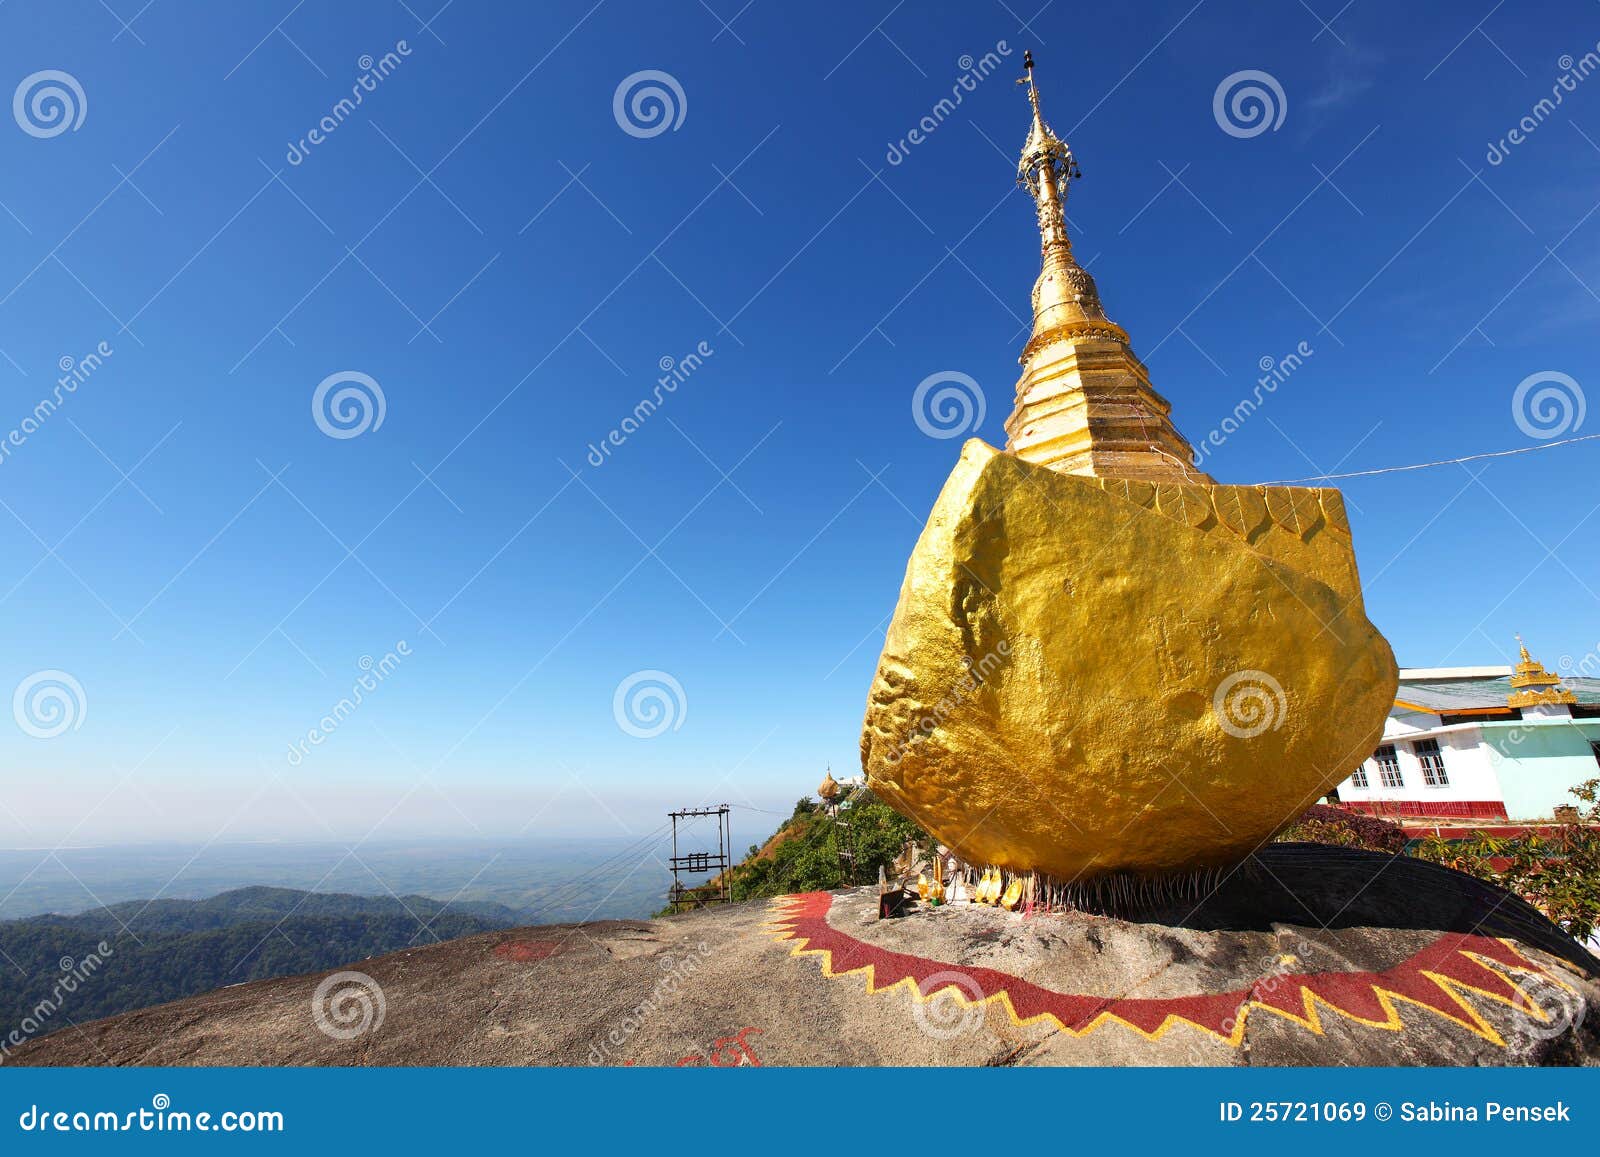 golden rock a buddhist pilgrimage site, myanmar